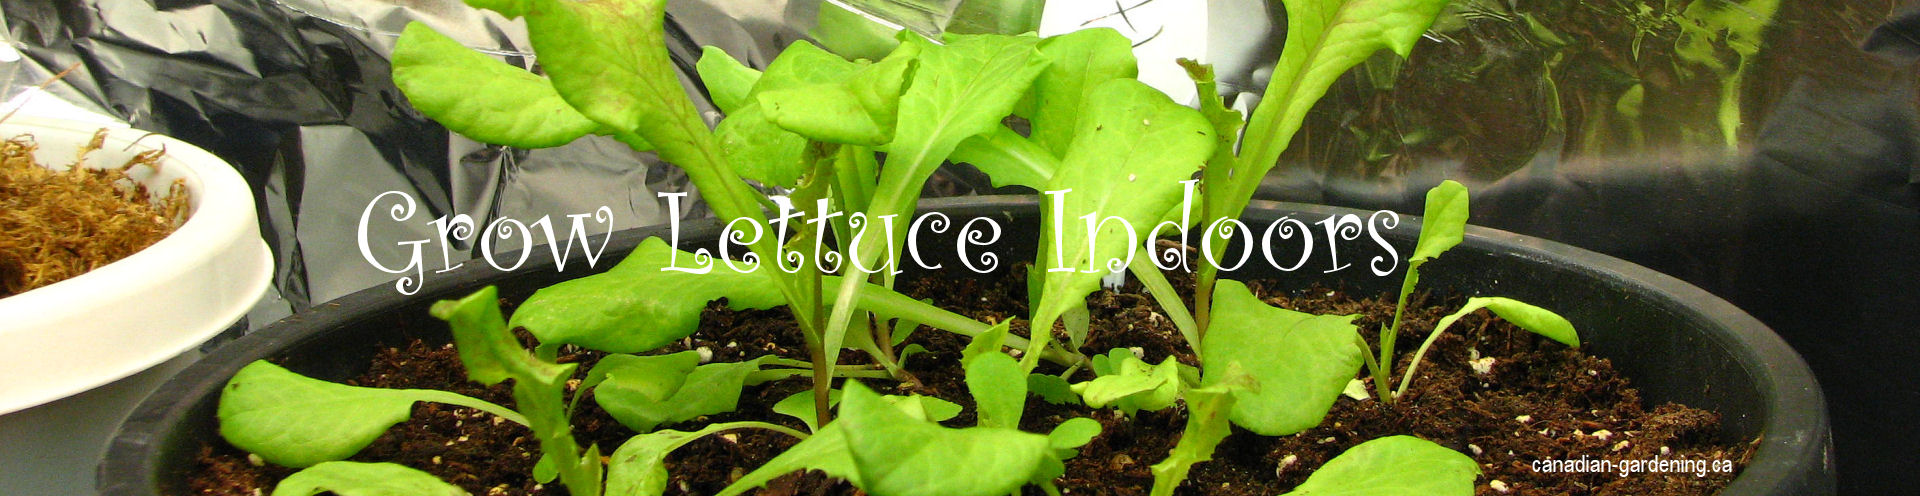 grow lettuce indoors  logo